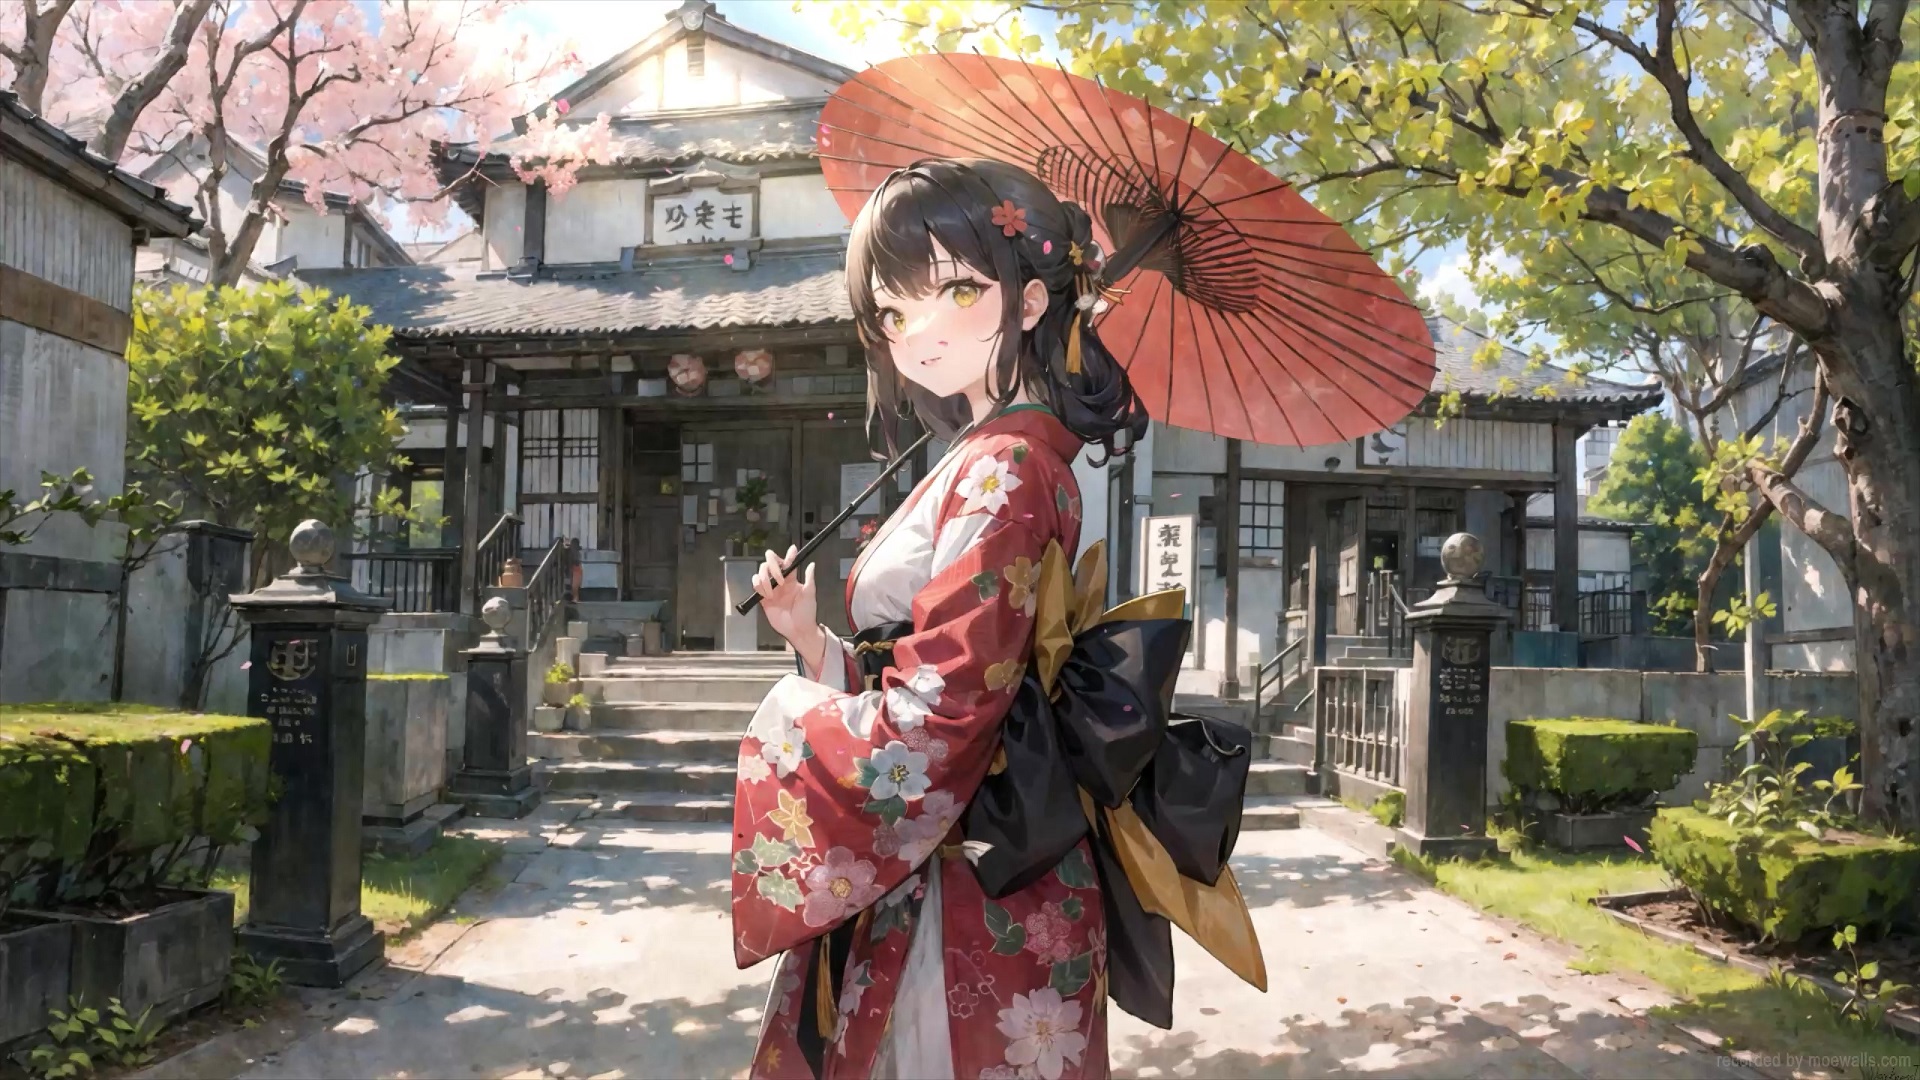 HD desktop wallpaper Anime Kimono Geisha download free picture 970292